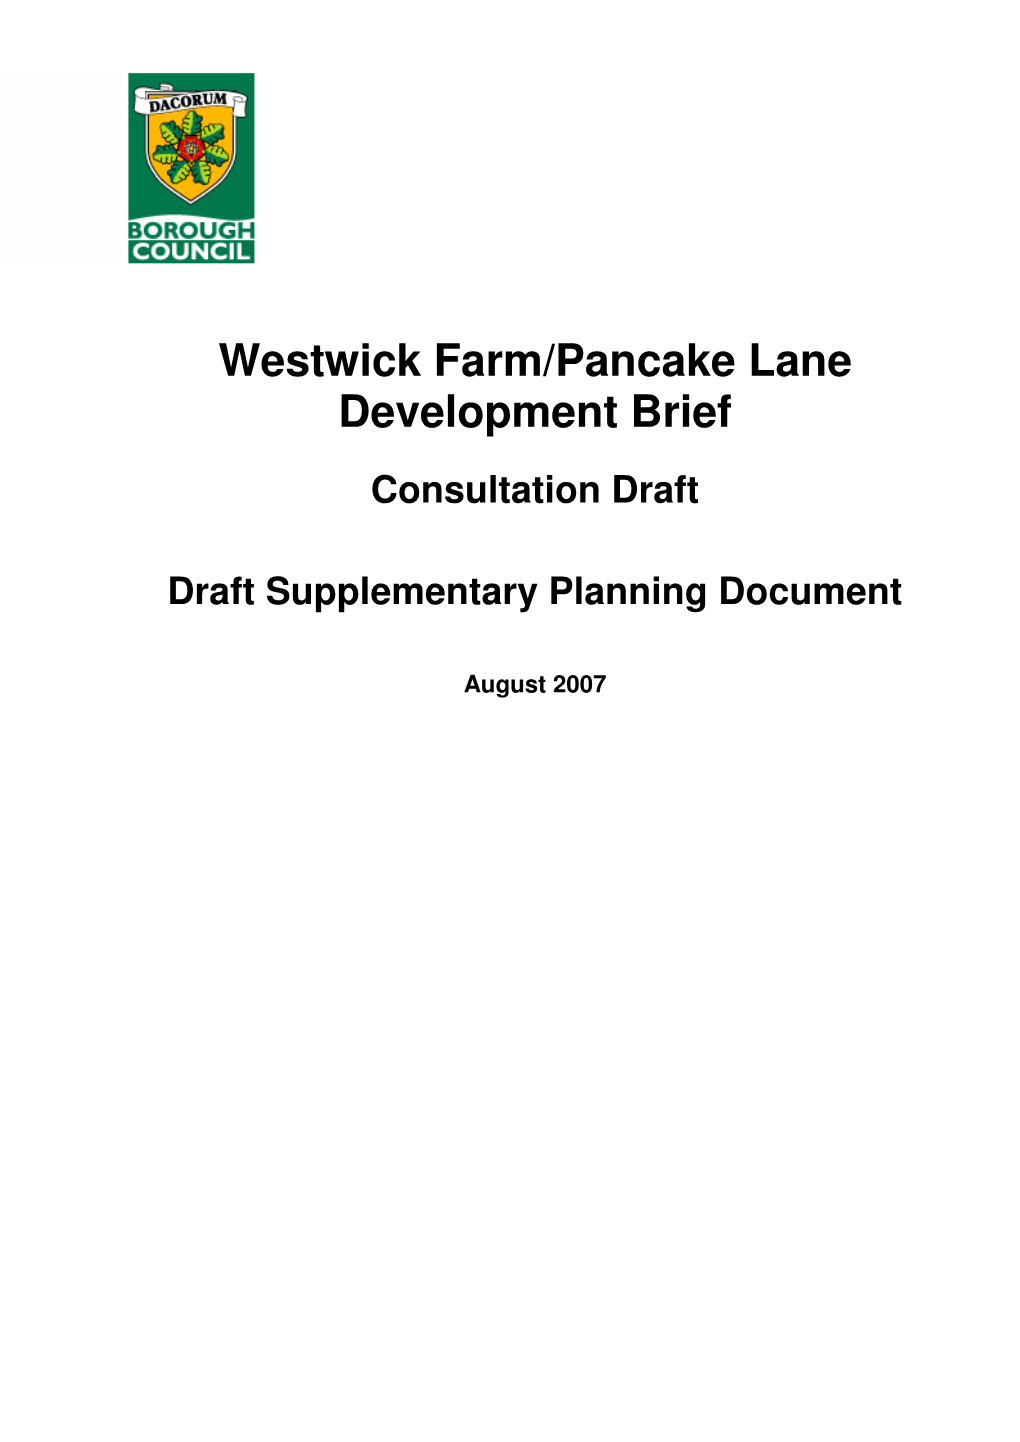 Westwick Farm/Pancake Lane Development Brief Consultation Draft